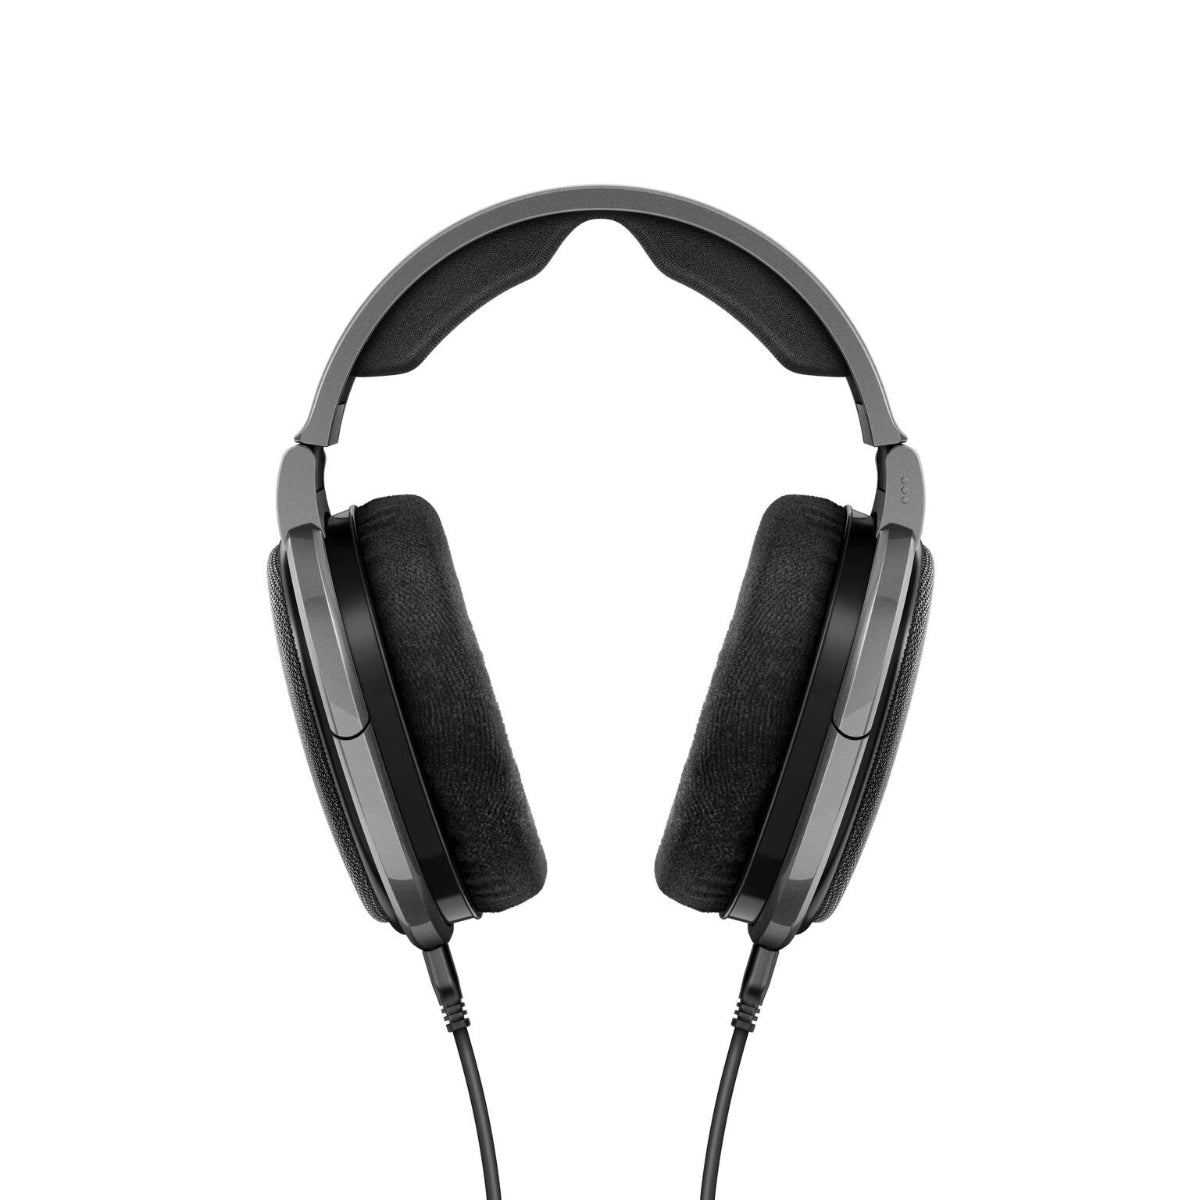 Sennheiser HD 650 Over-Ear Audiophile Headphones